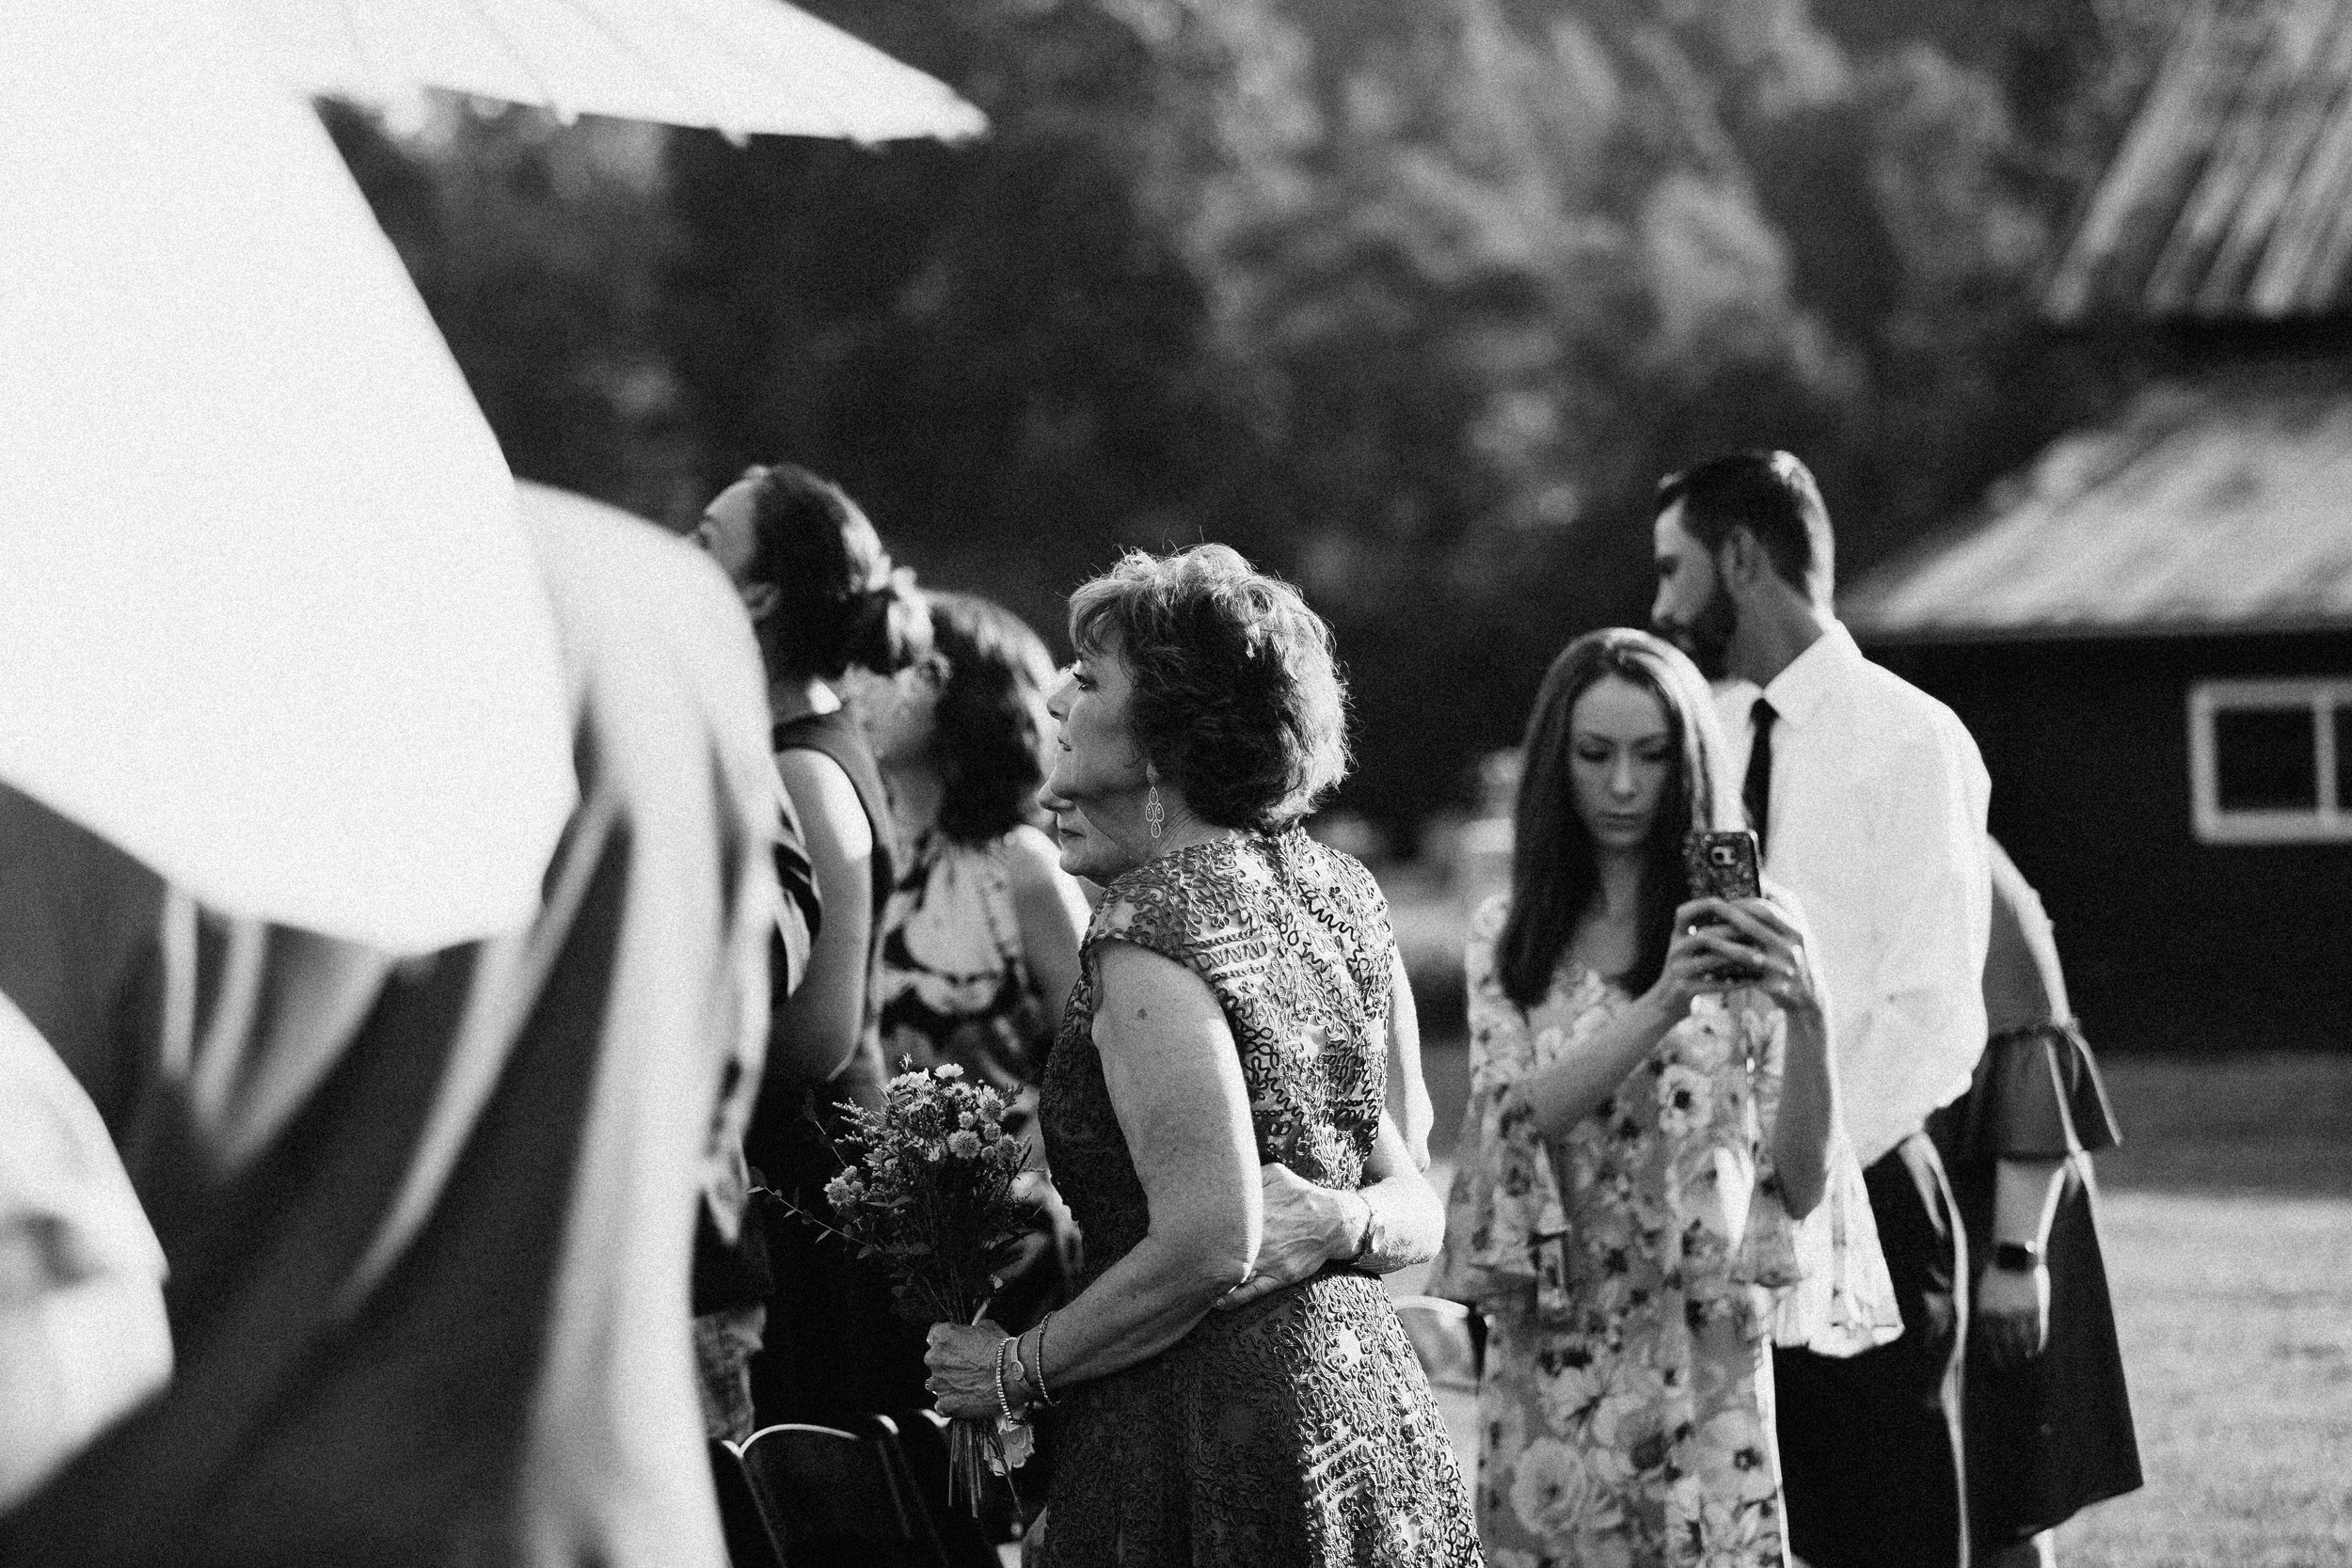 cleveland_georgia_mountain_laurel_farm_natural_classic_timeless_documentary_candid_wedding_emotional_photojournalism_river_west_1635.jpg